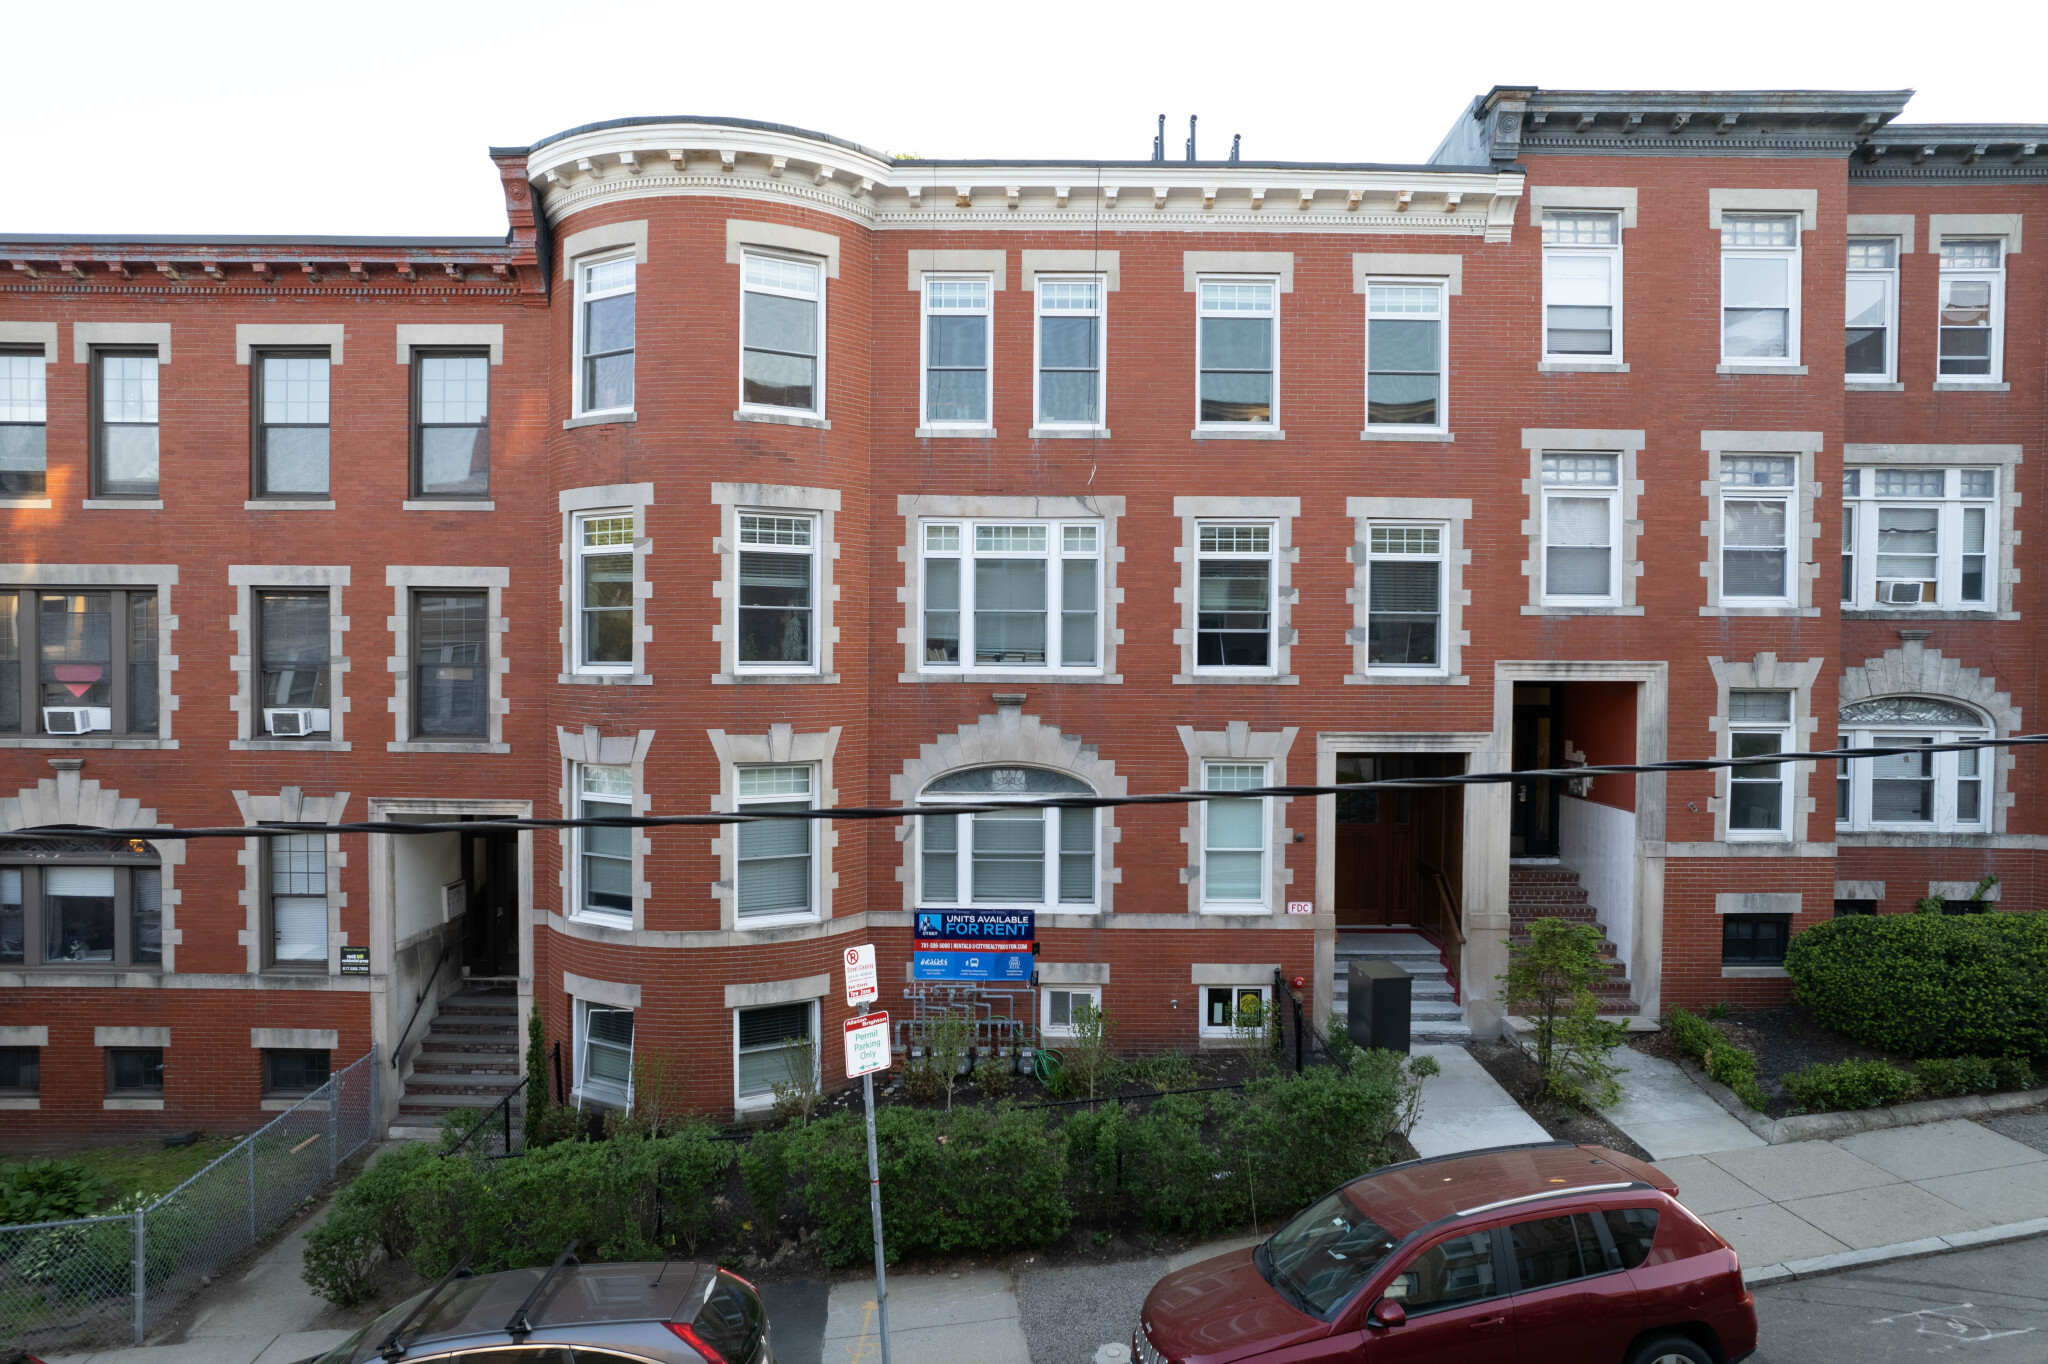 Photos of apartment on Langley,Boston MA 02135